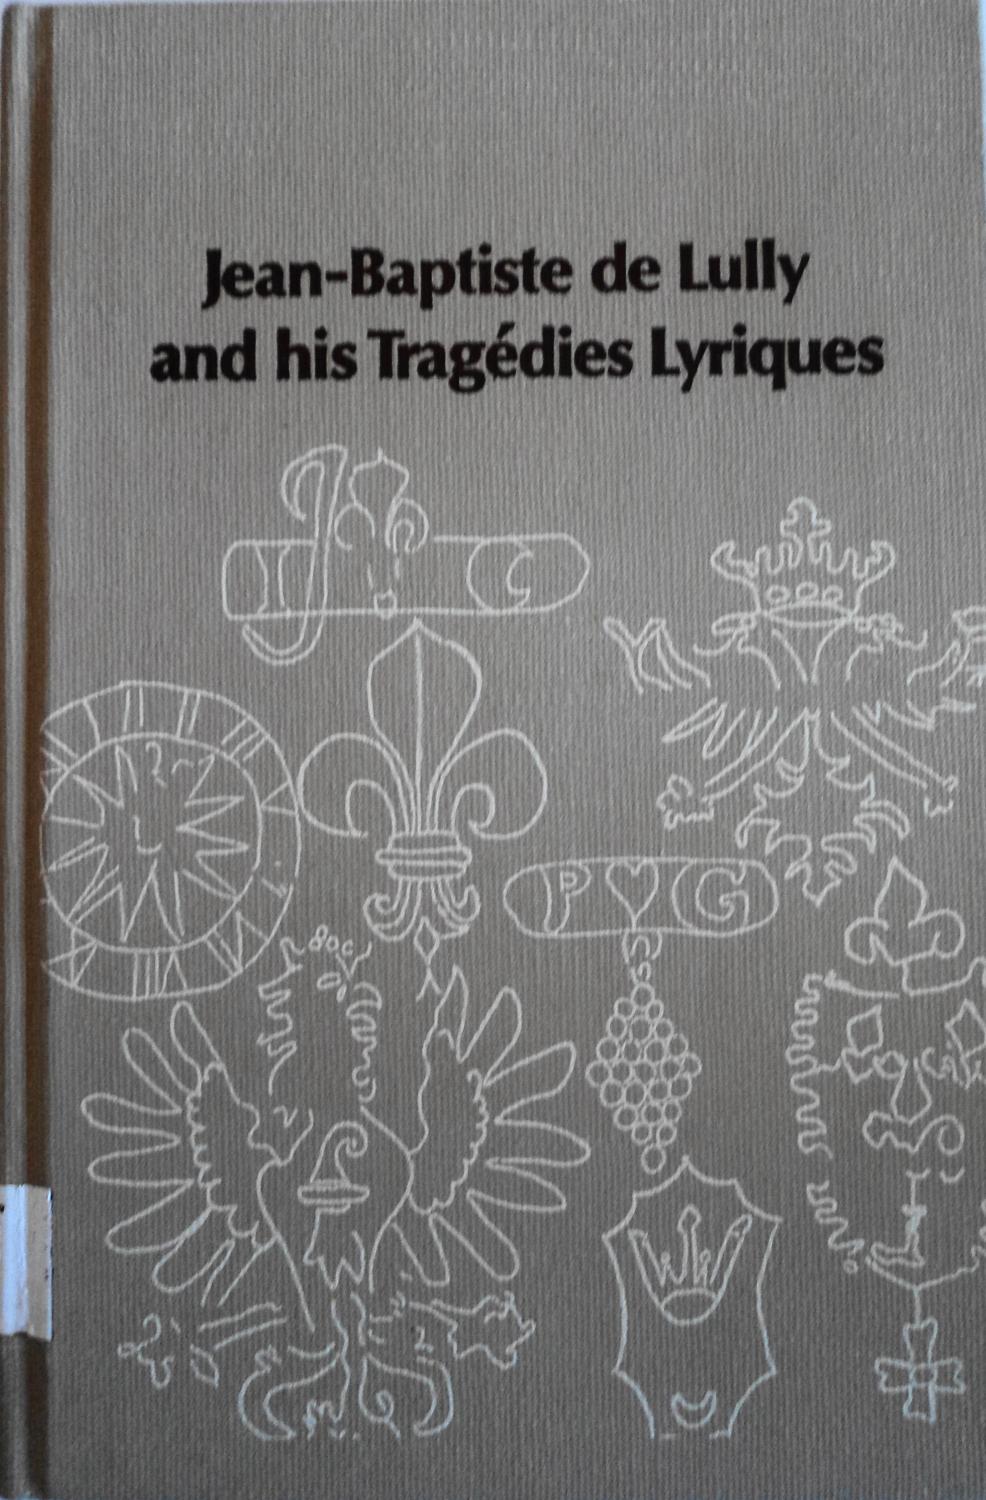 Jean-Baptiste De Lully and His "Tragedies Lyriques"